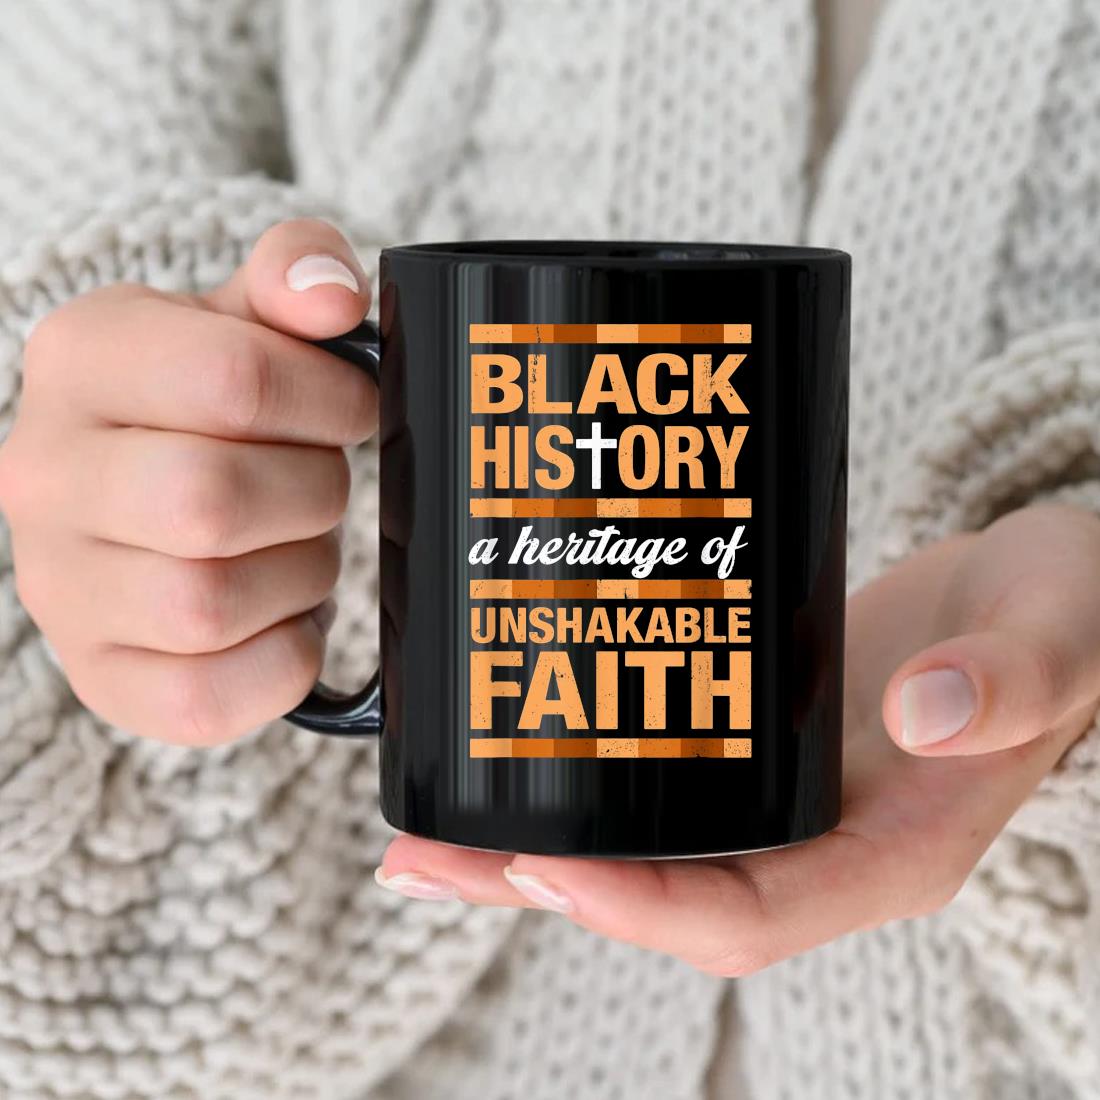 Black History Heritage Proud Juneteenth Melanin Faith 2022 Mug